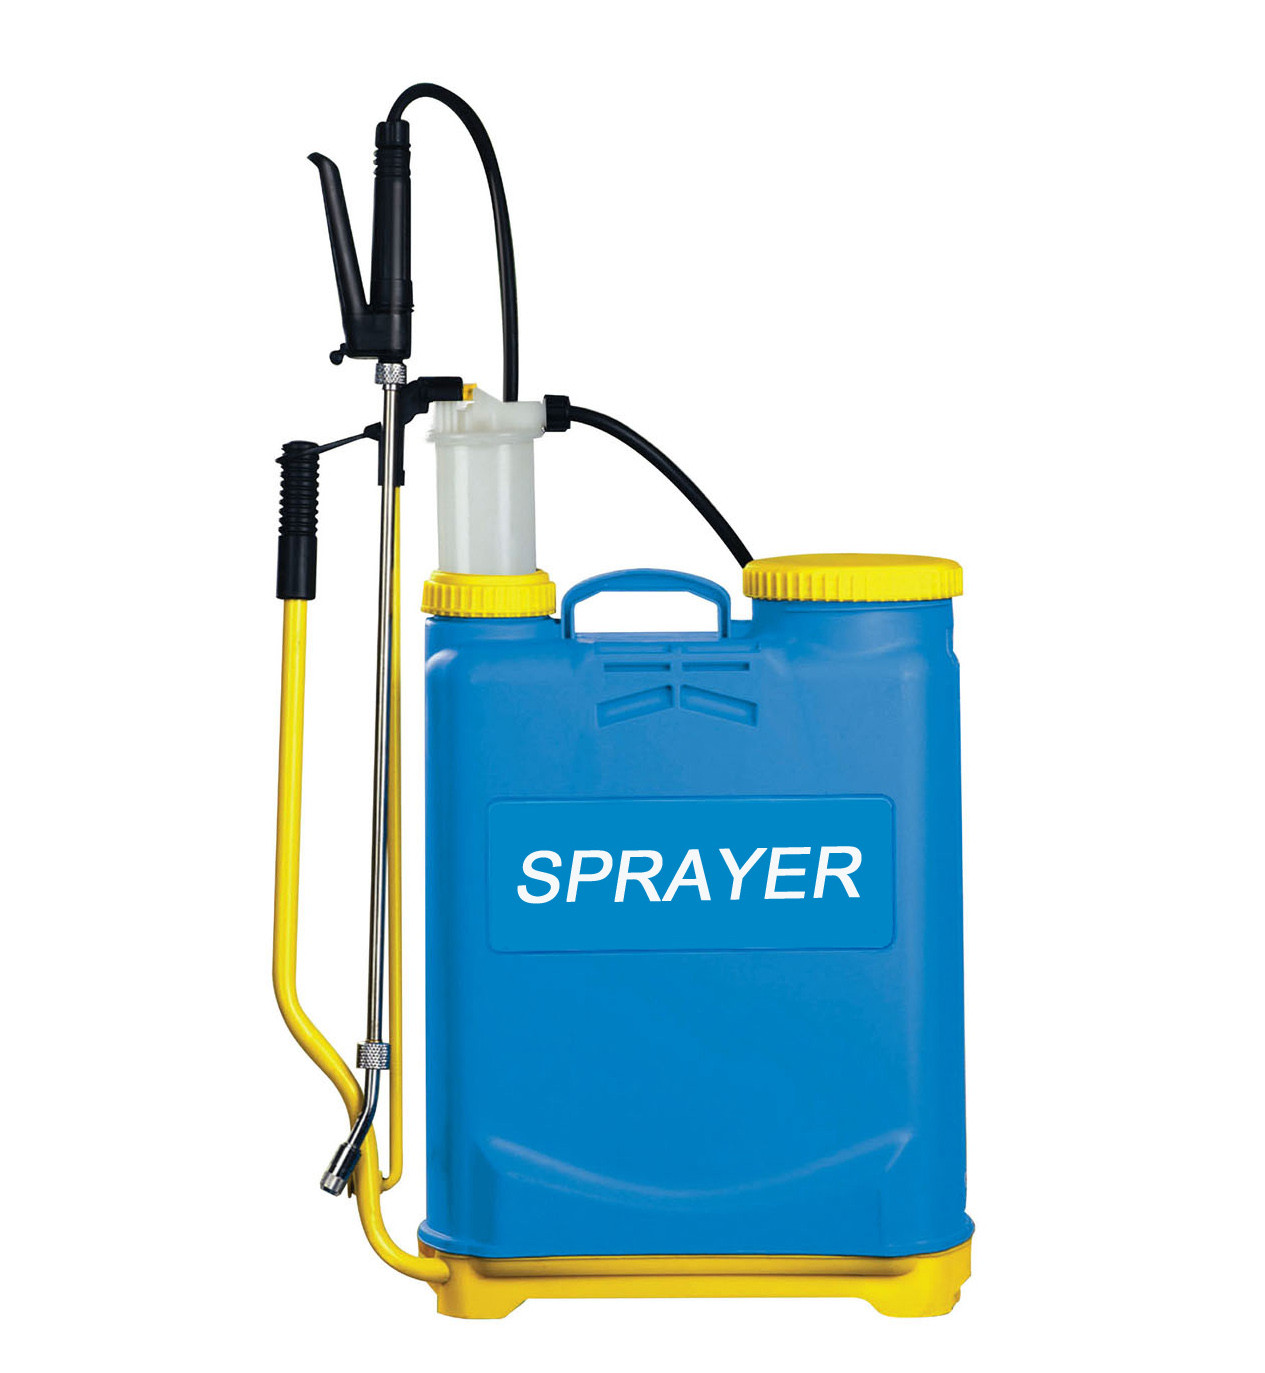 Knapsack Sprayer Backpack Sprayer Manual Sprayer Hand Sprayer Agro